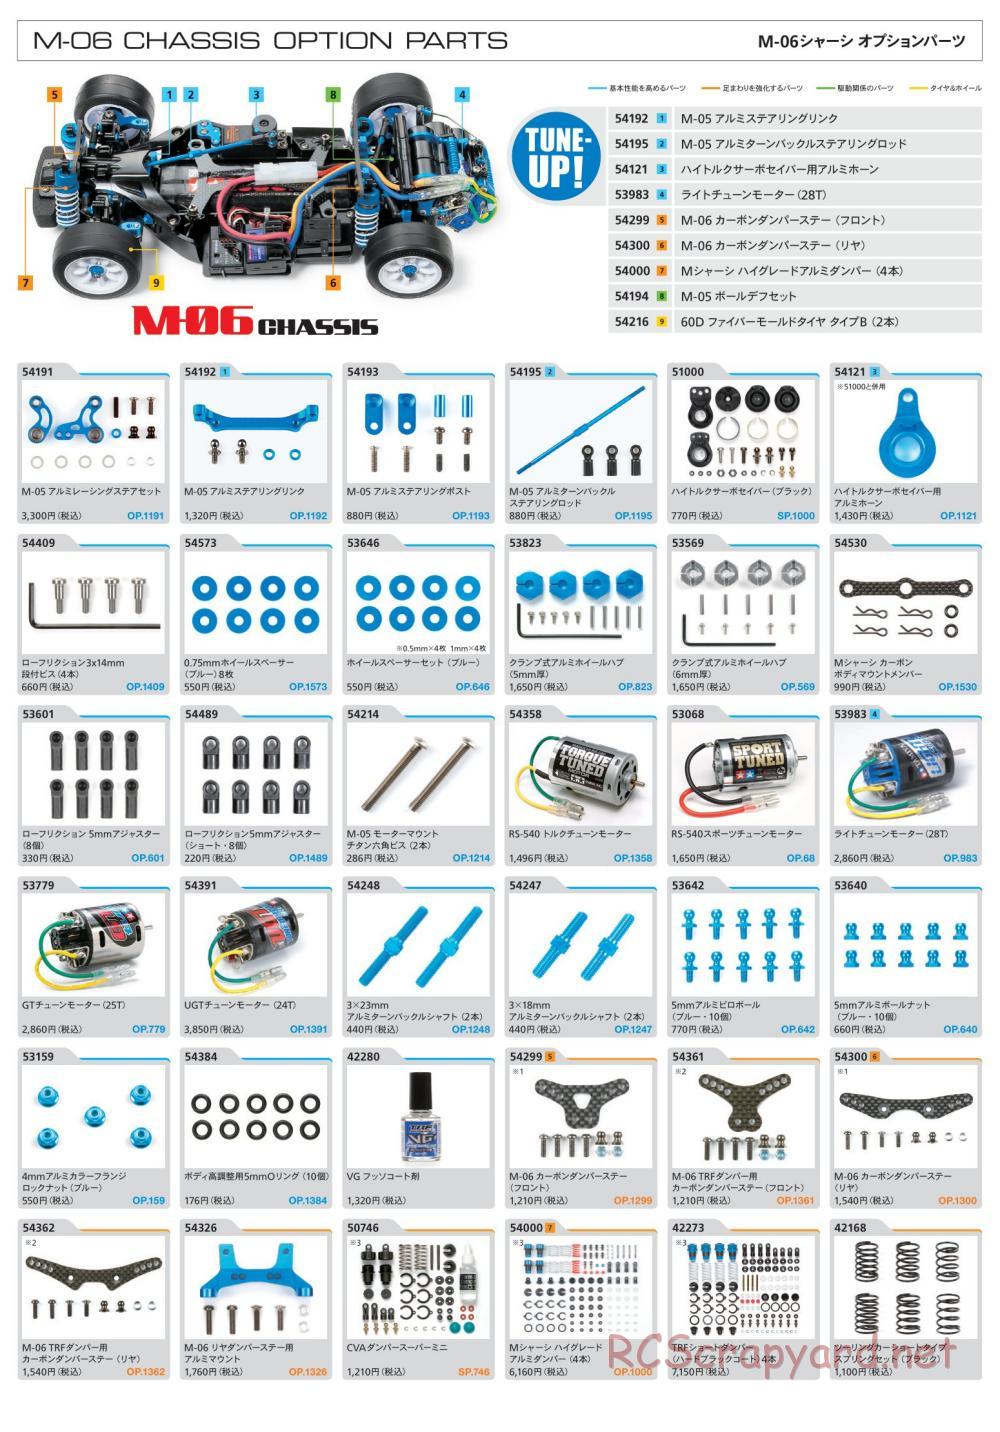 Tamiya - M-06 Chassis - Option Parts - Page 1